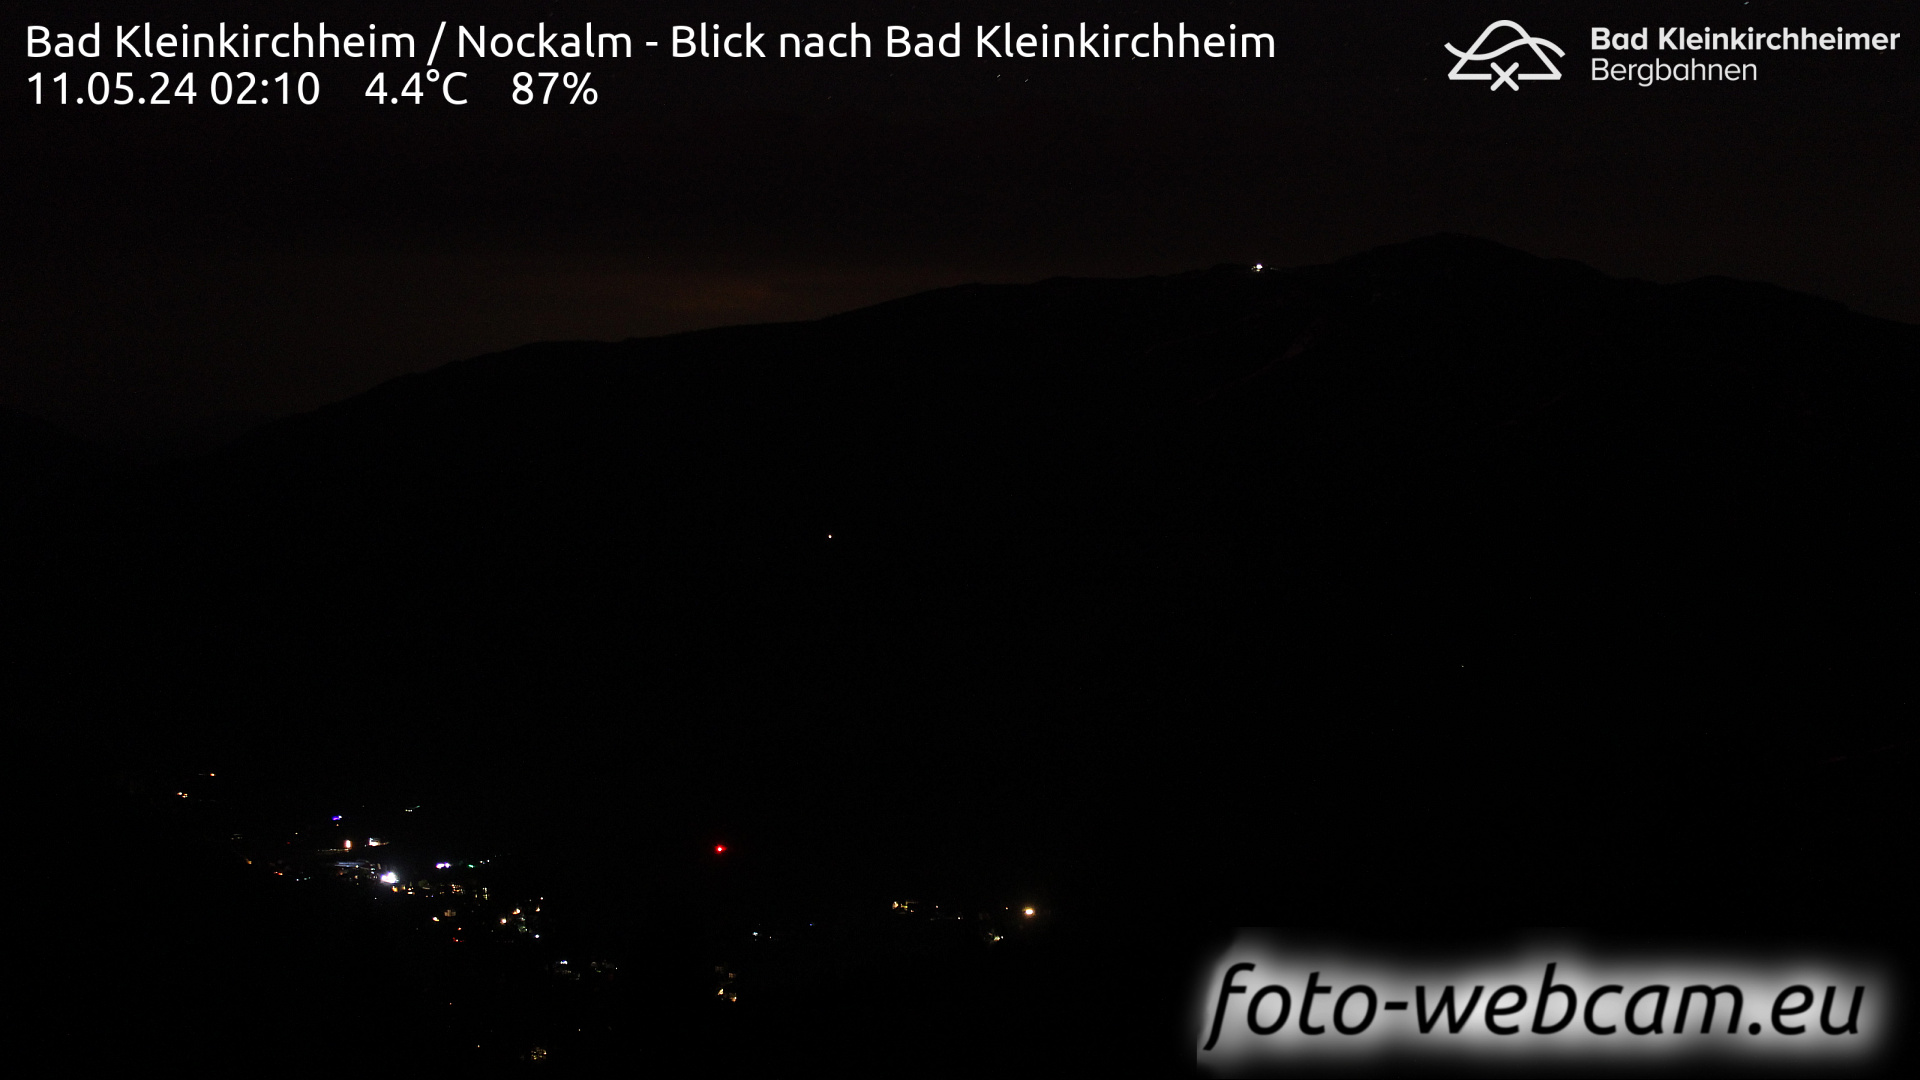 Bad Kleinkirchheim Thu. 02:17